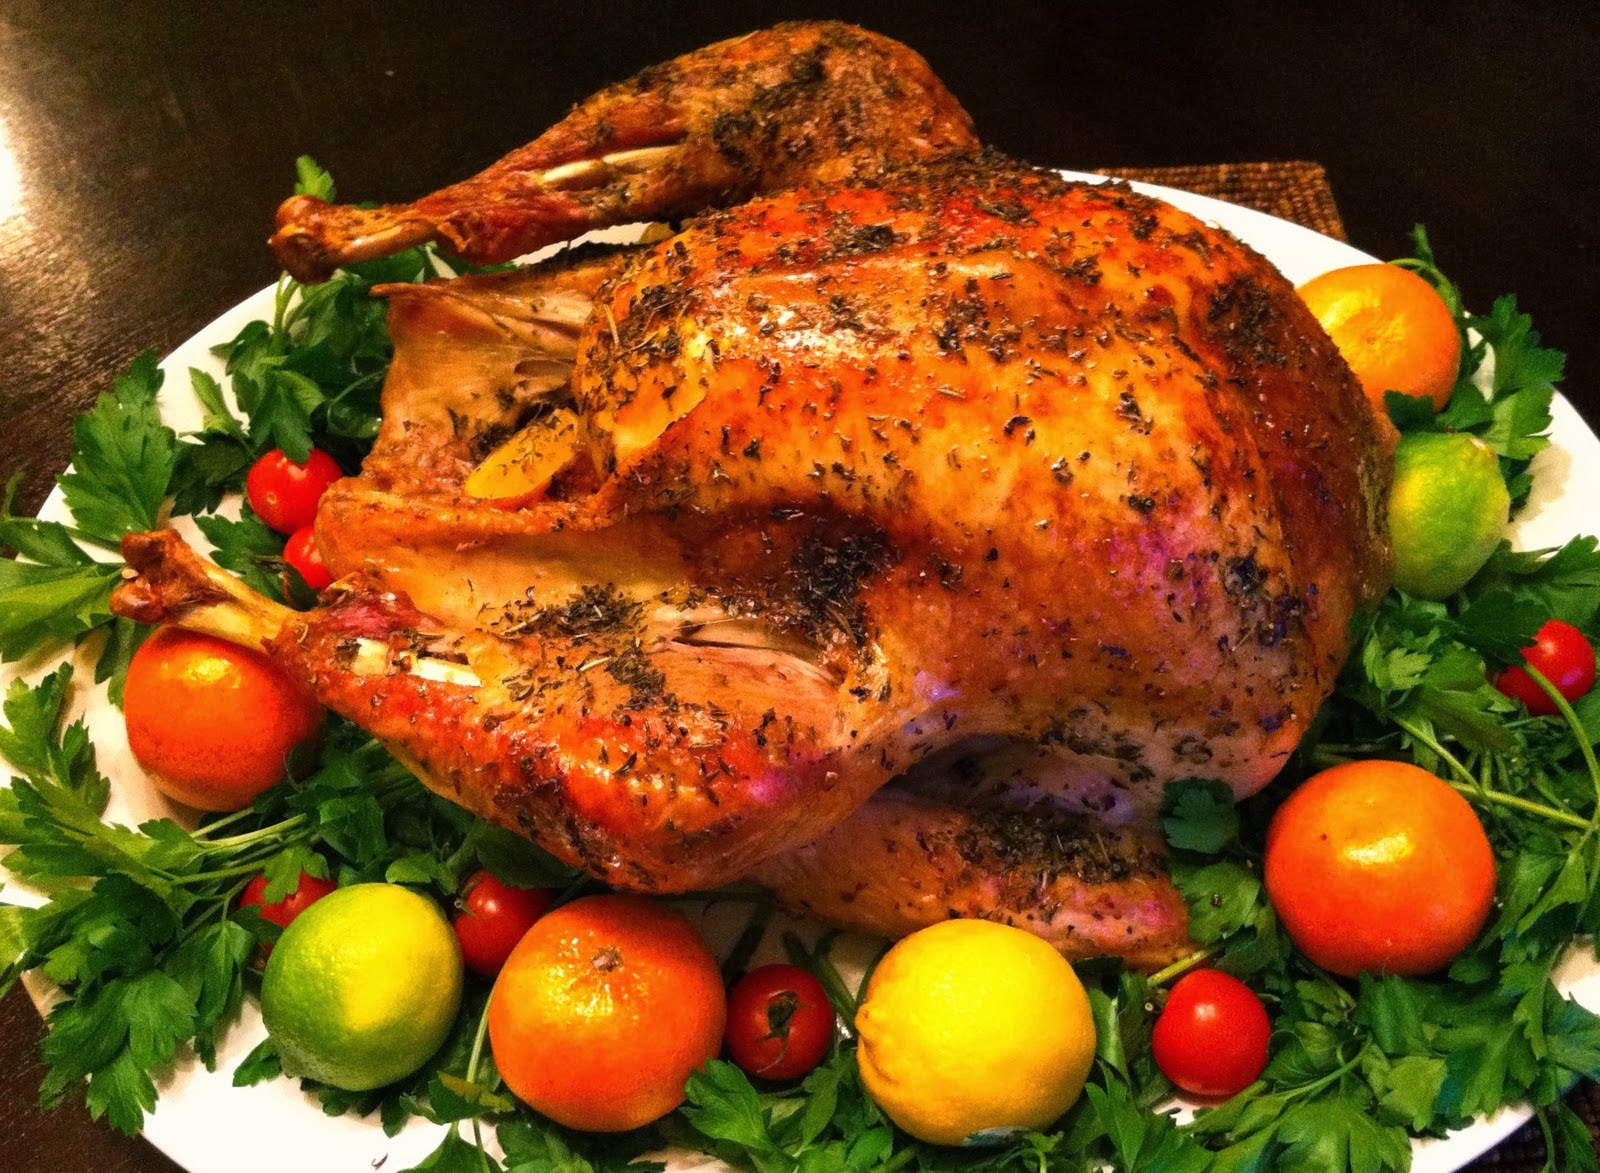 Roast Turkey Recipe